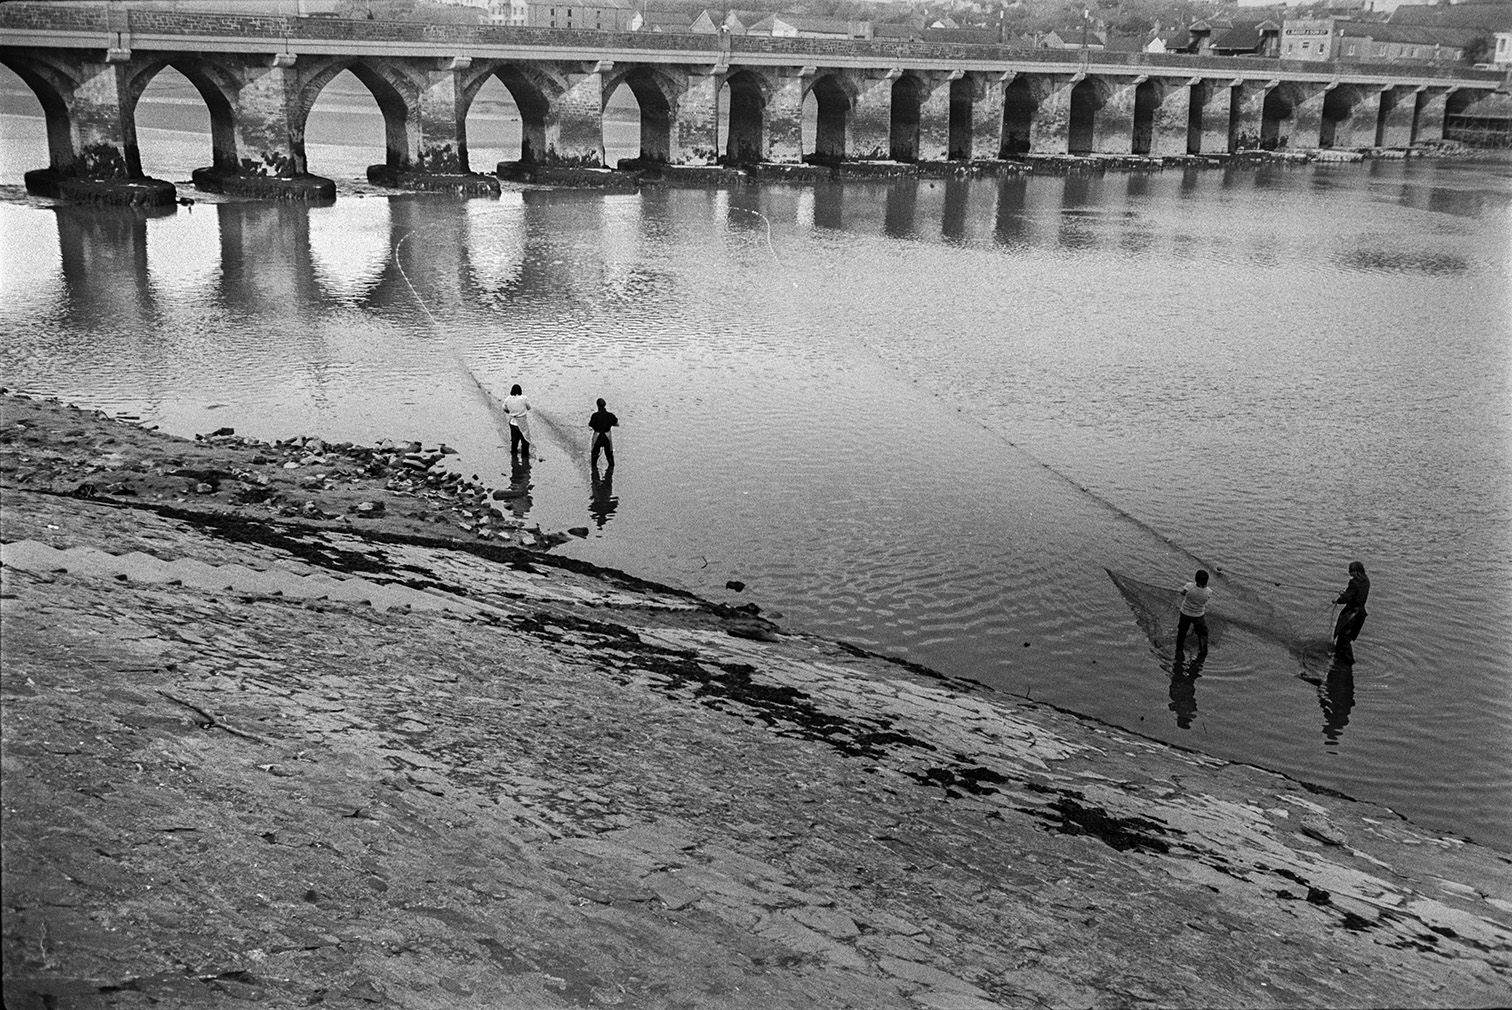 People pulling in salmon nets on the River Torridge at Bideford. Bridge Long Bridge, also known as Bideford Old Bridge, is visible in the background.